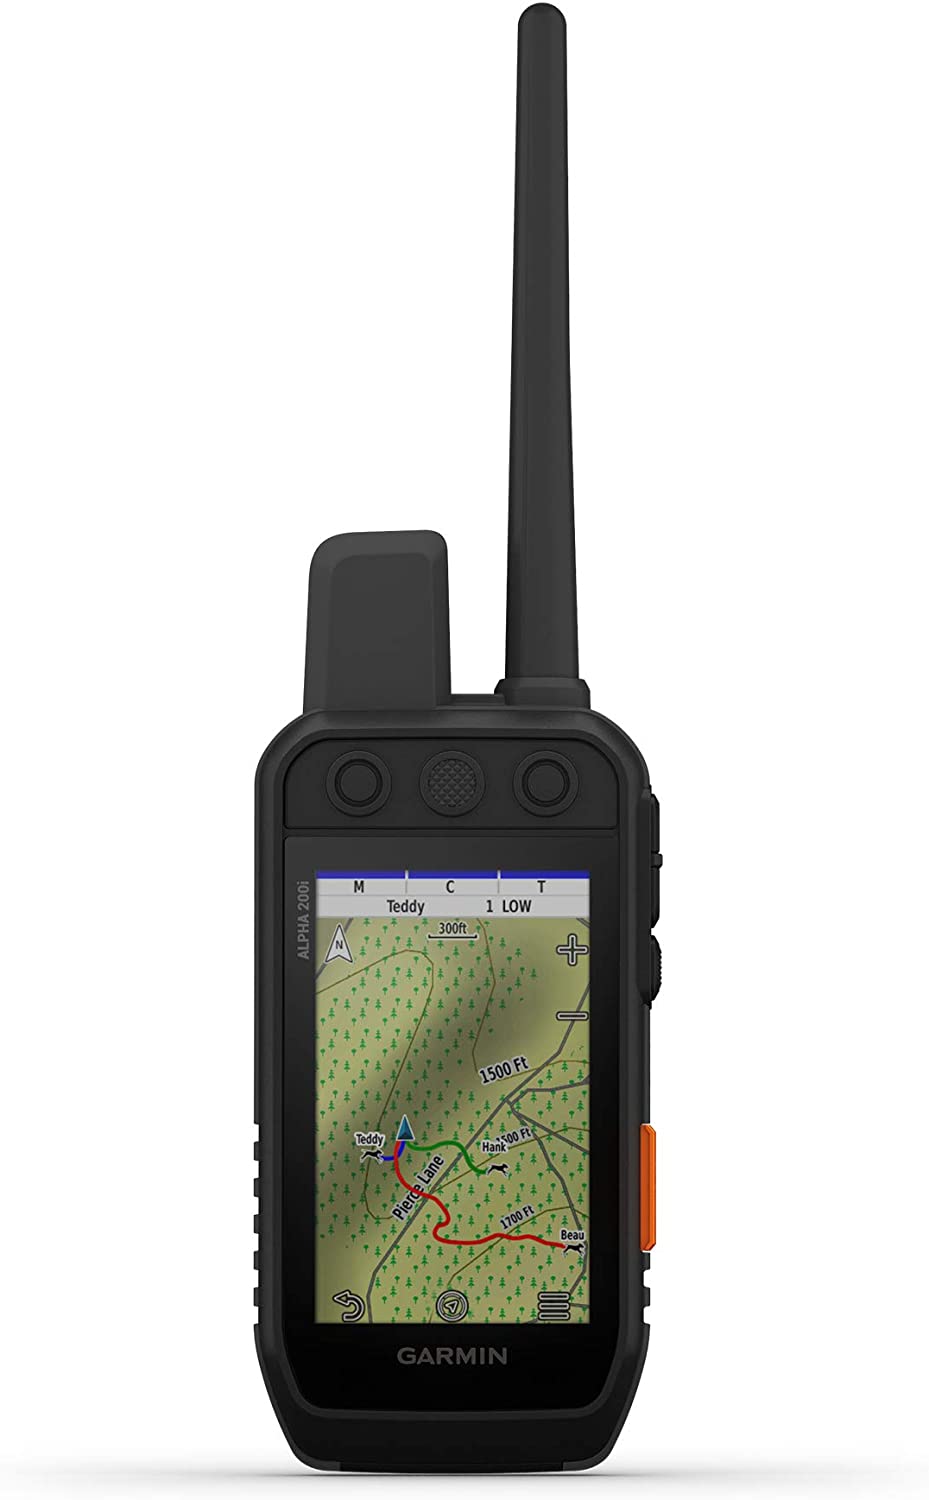 Garmin - Alpha 200i Dog Tracking and Training Handheld